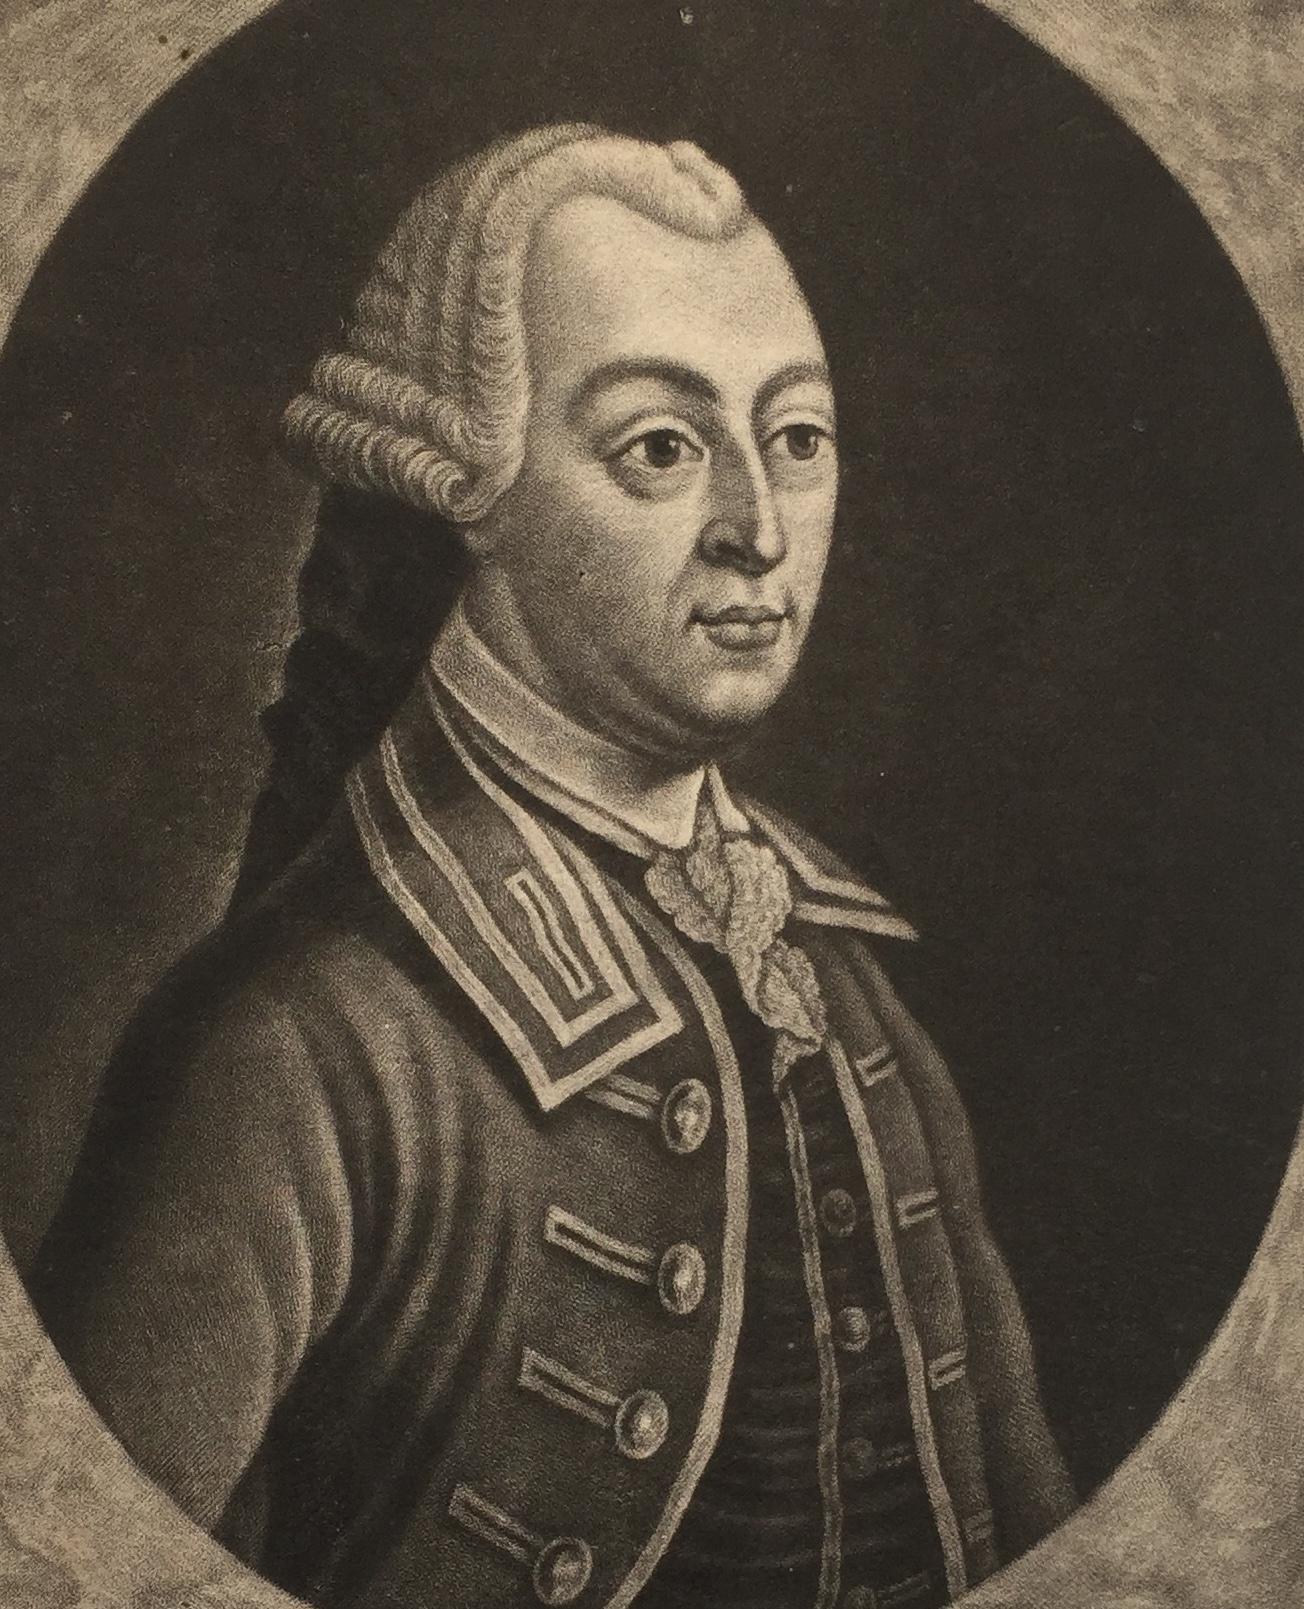  JOHN HANCOCK - Lifetime Portrait  - Signer of the Declaration of Independence  - Print by John Wilkinson